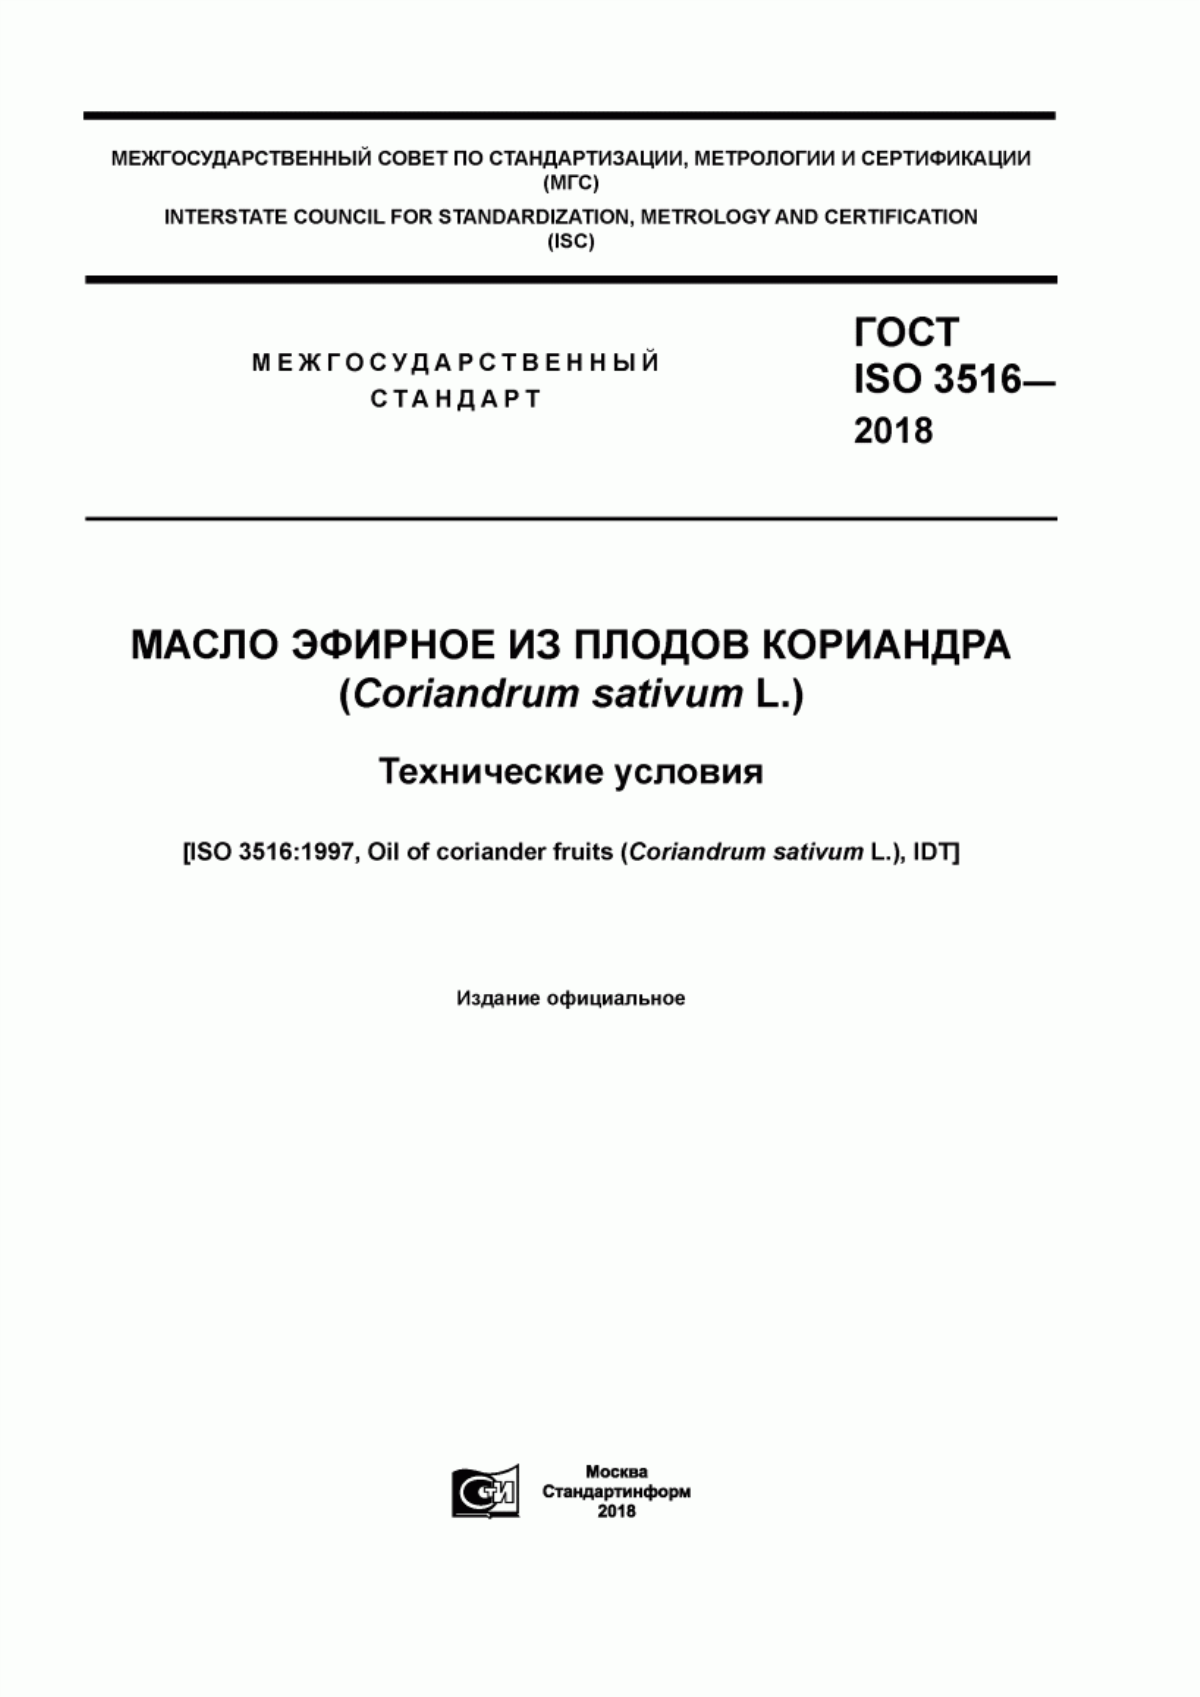 ГОСТ ISO 3516-2018 Масло эфирное из плодов кориандра (Coriandrum sativum L.). Технические условия